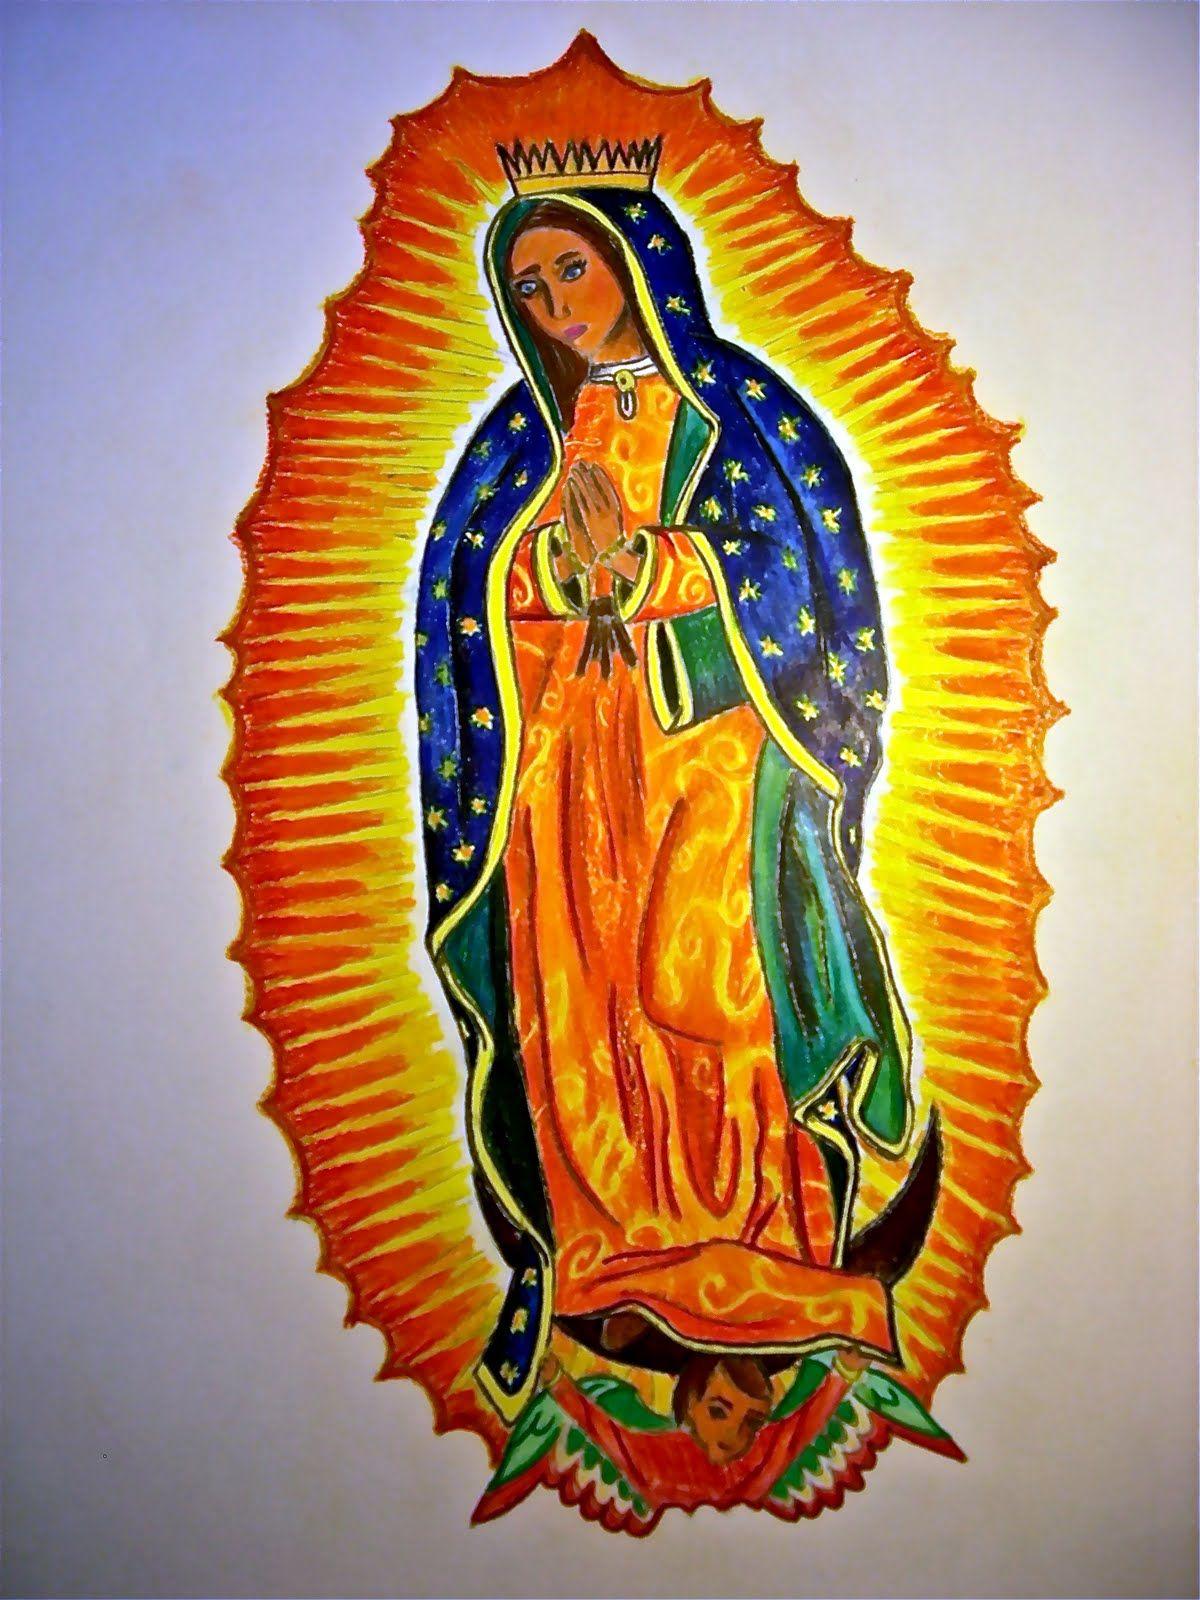 Mary by Lachlan English on Prezi